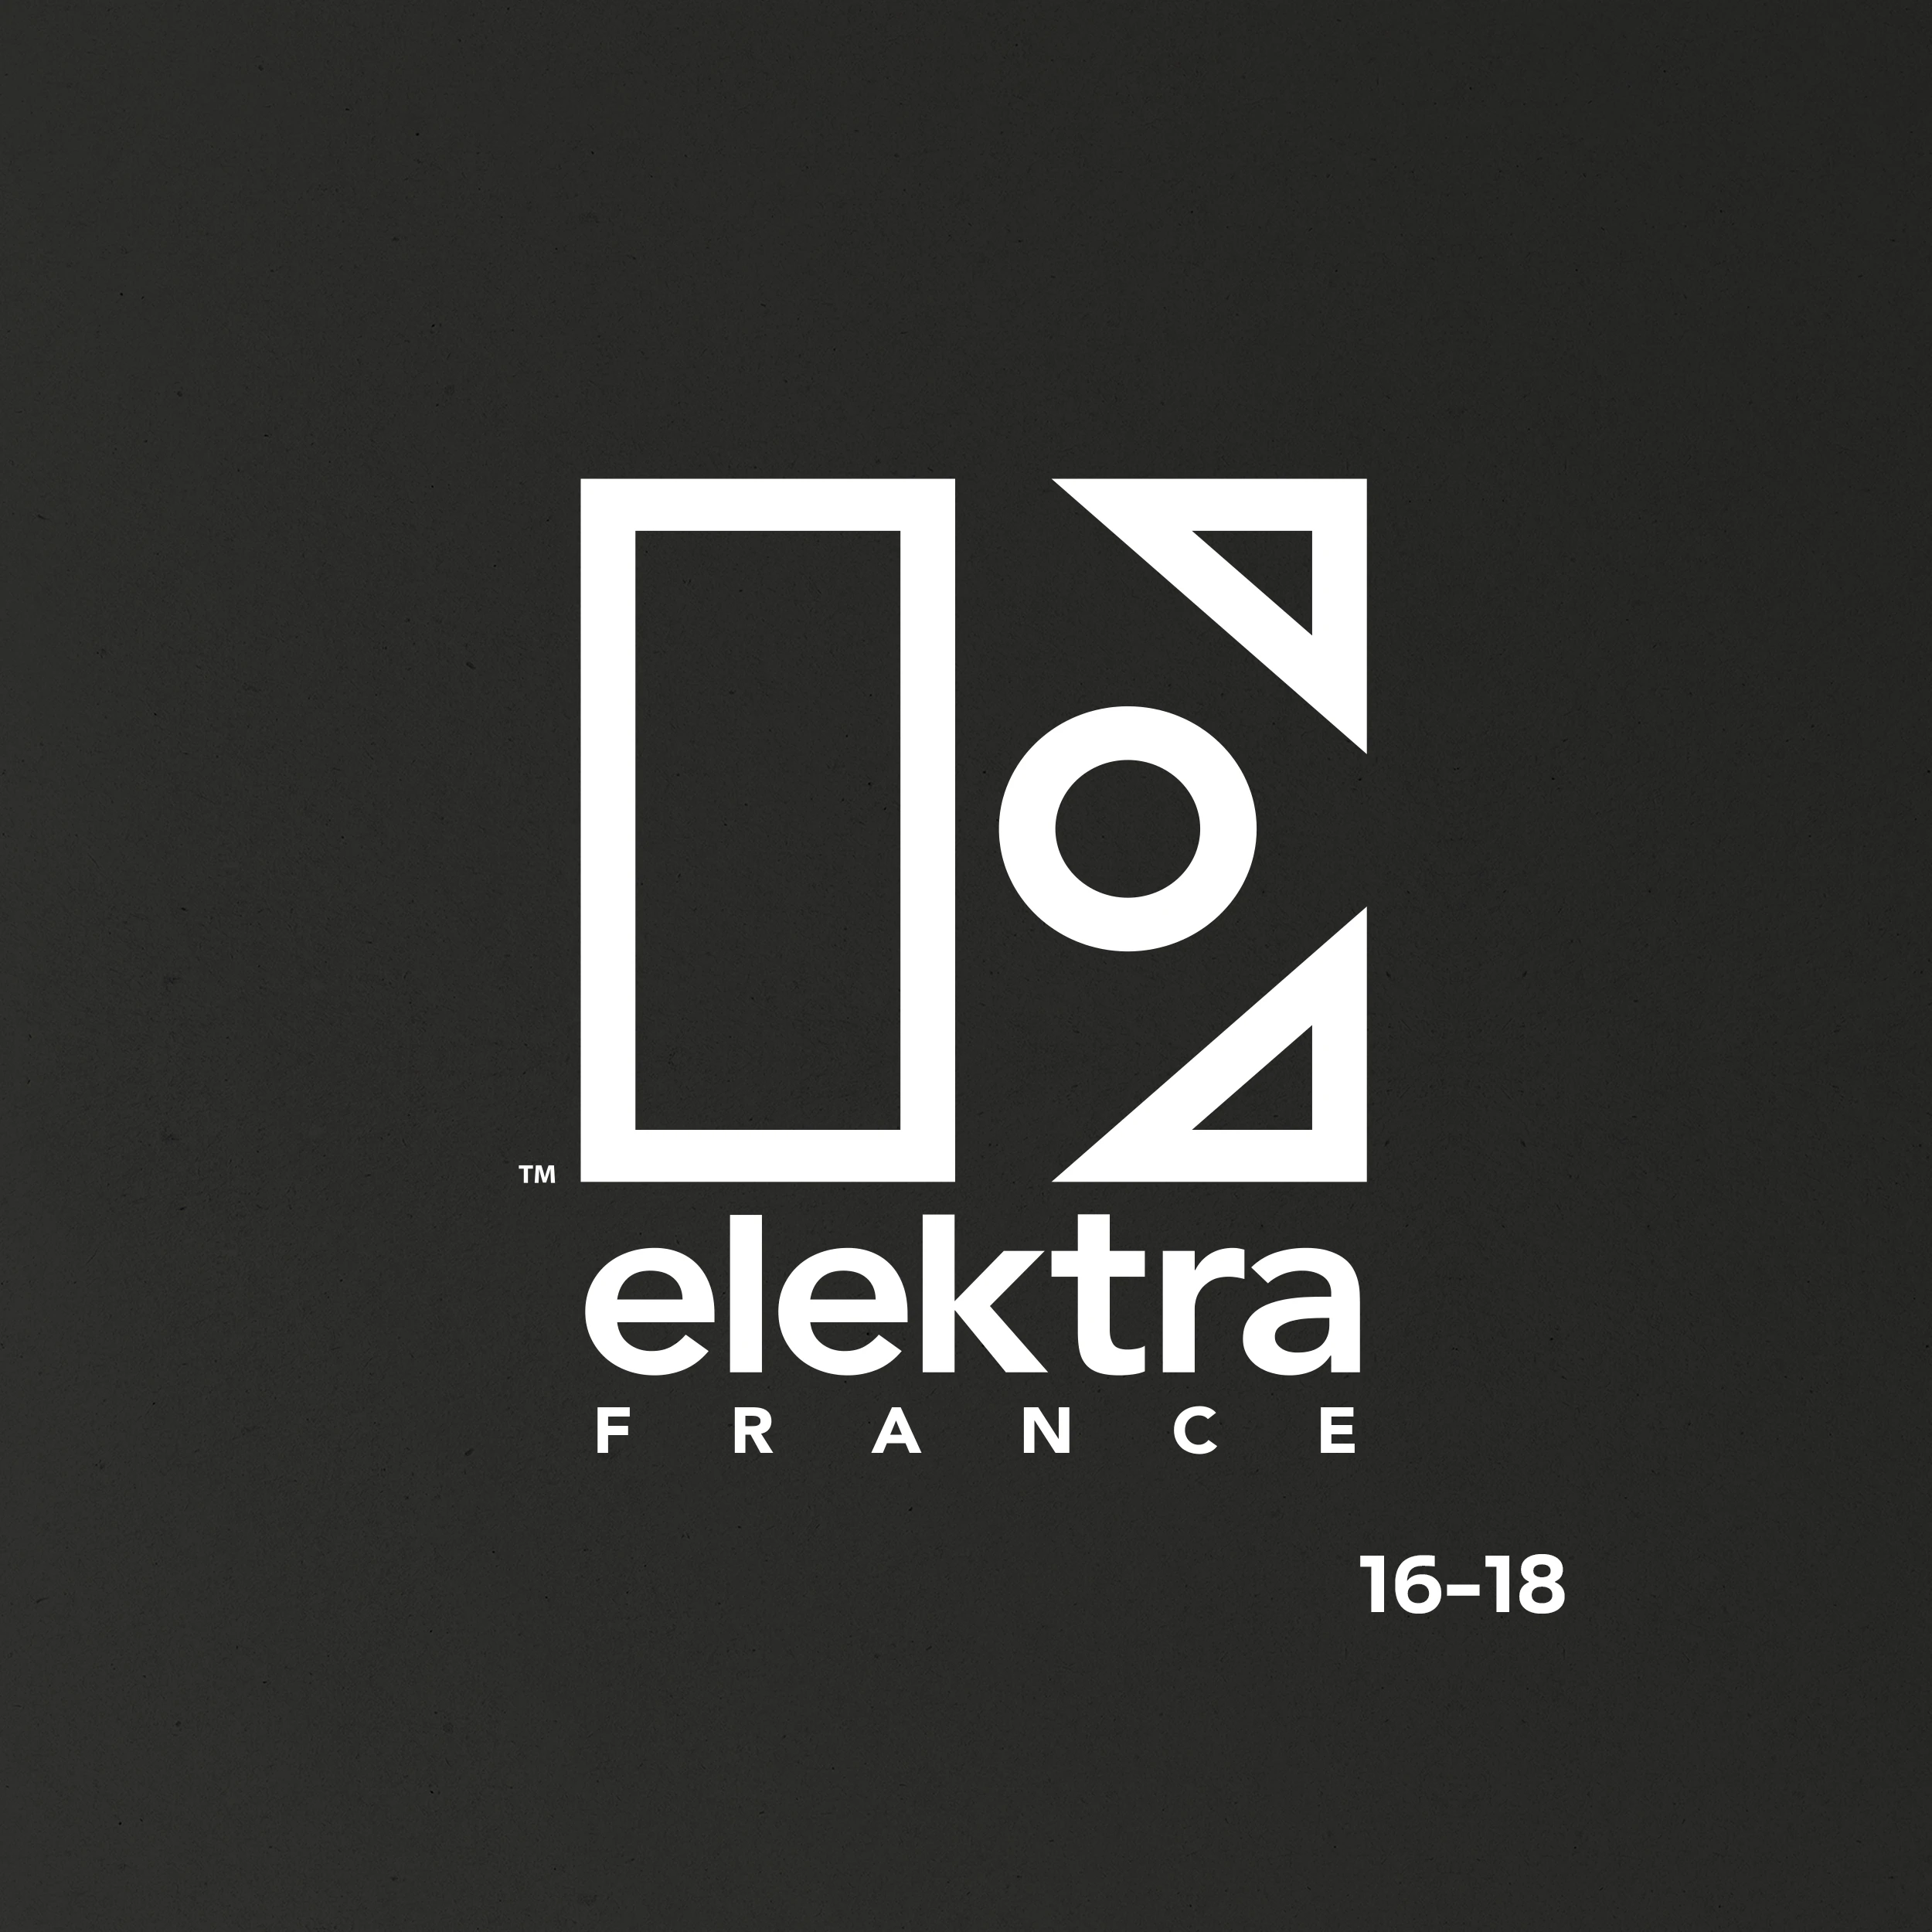 projet : Elektra France 16-18